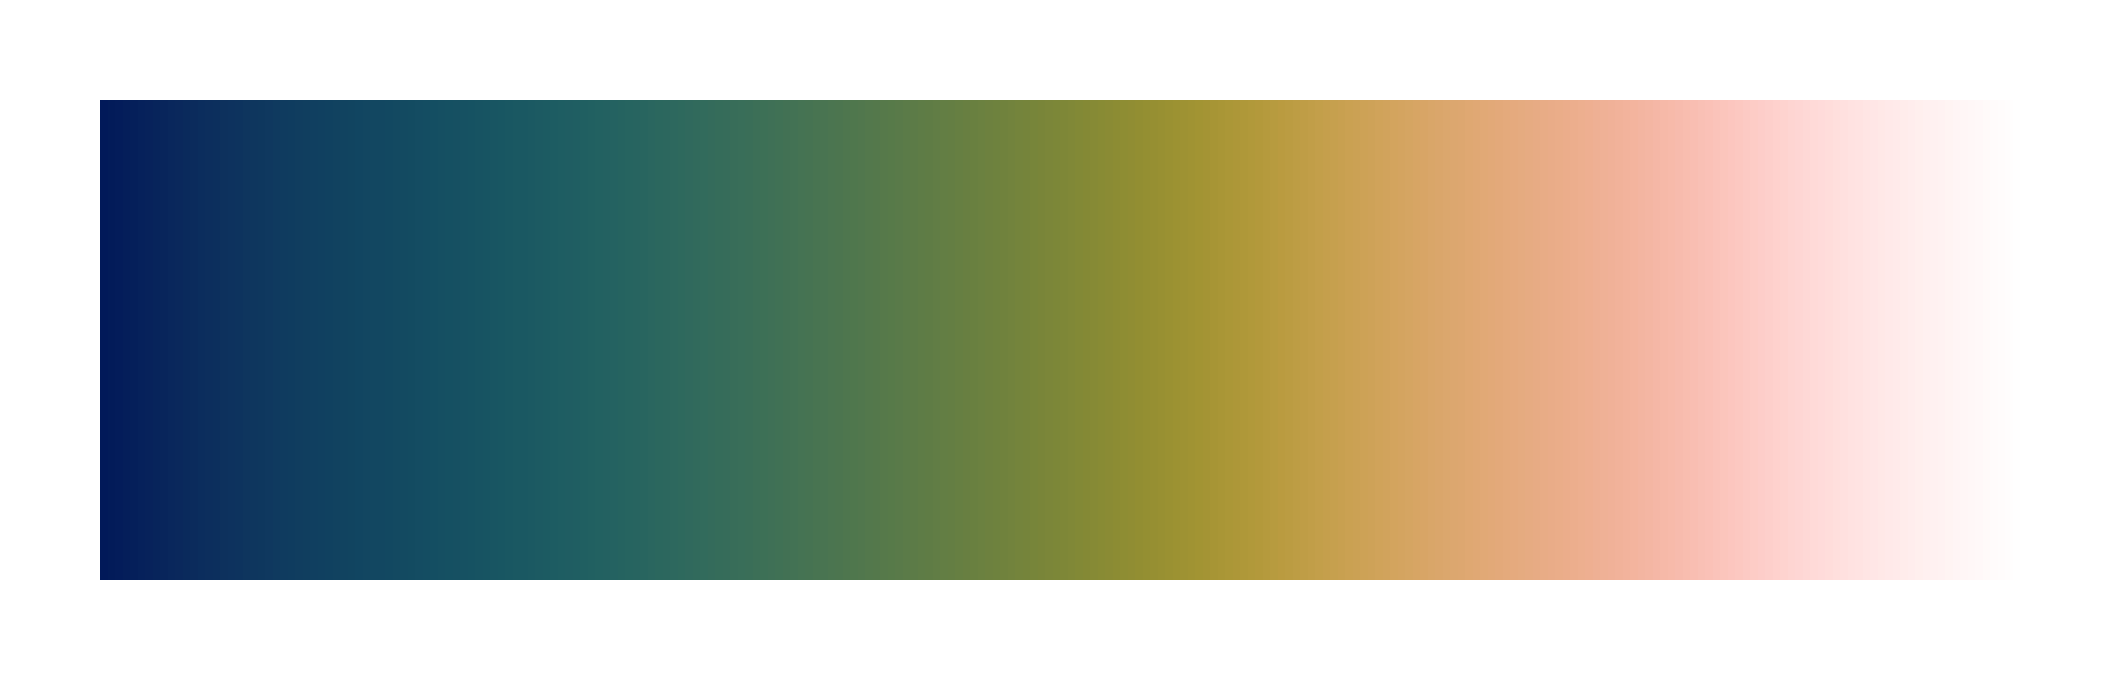 batlowW scientific color palette by Fabio Crameri